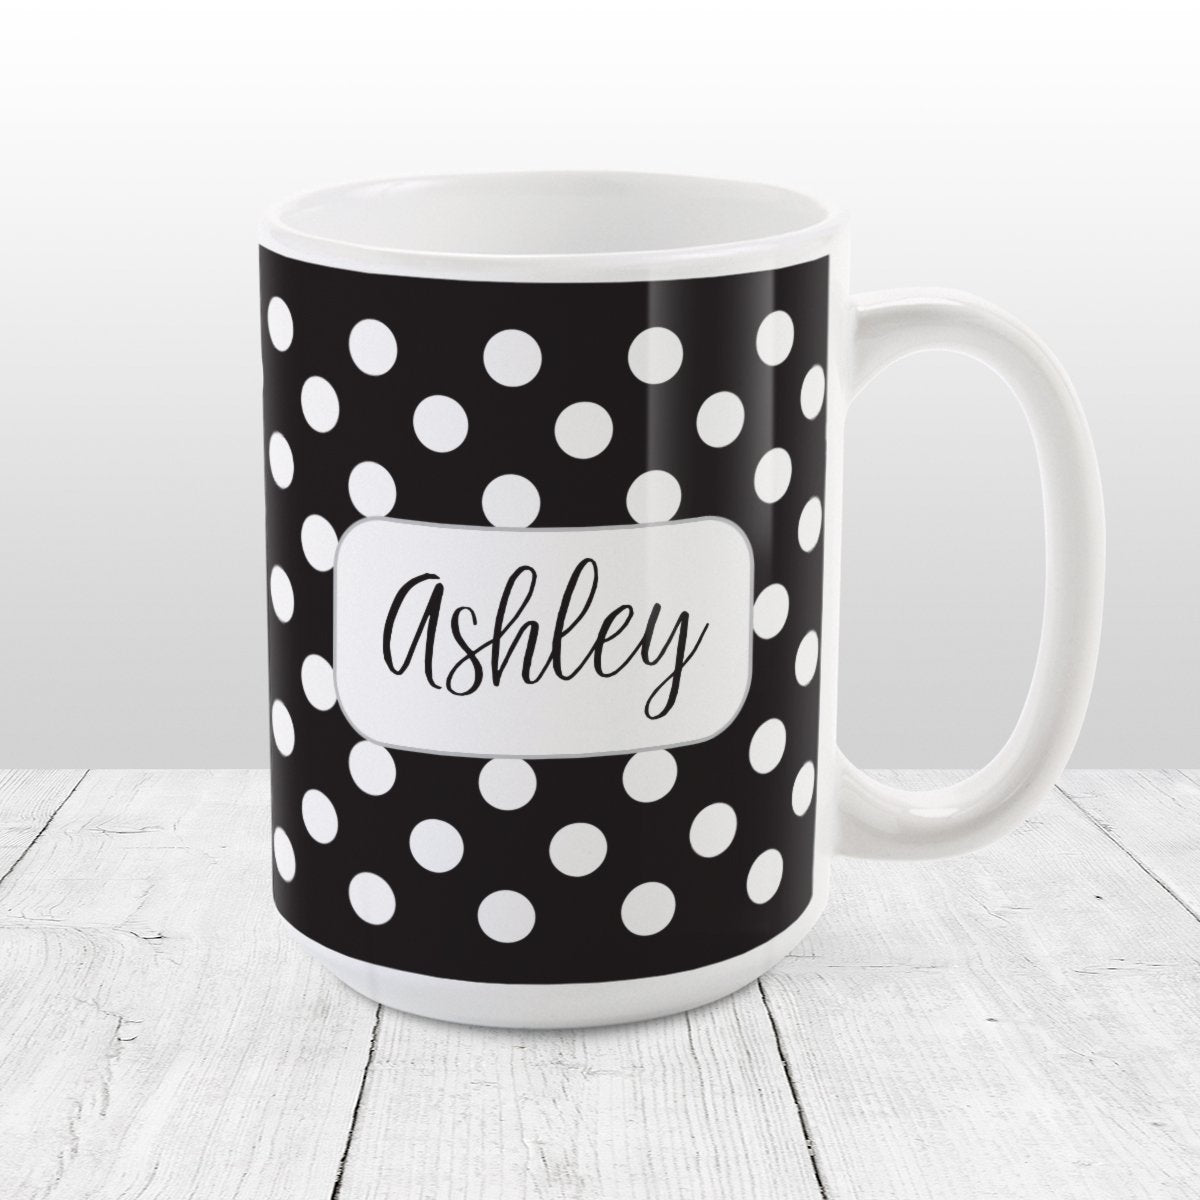 Personalized Black Polka Dot Mug at Amy's Coffee Mugs